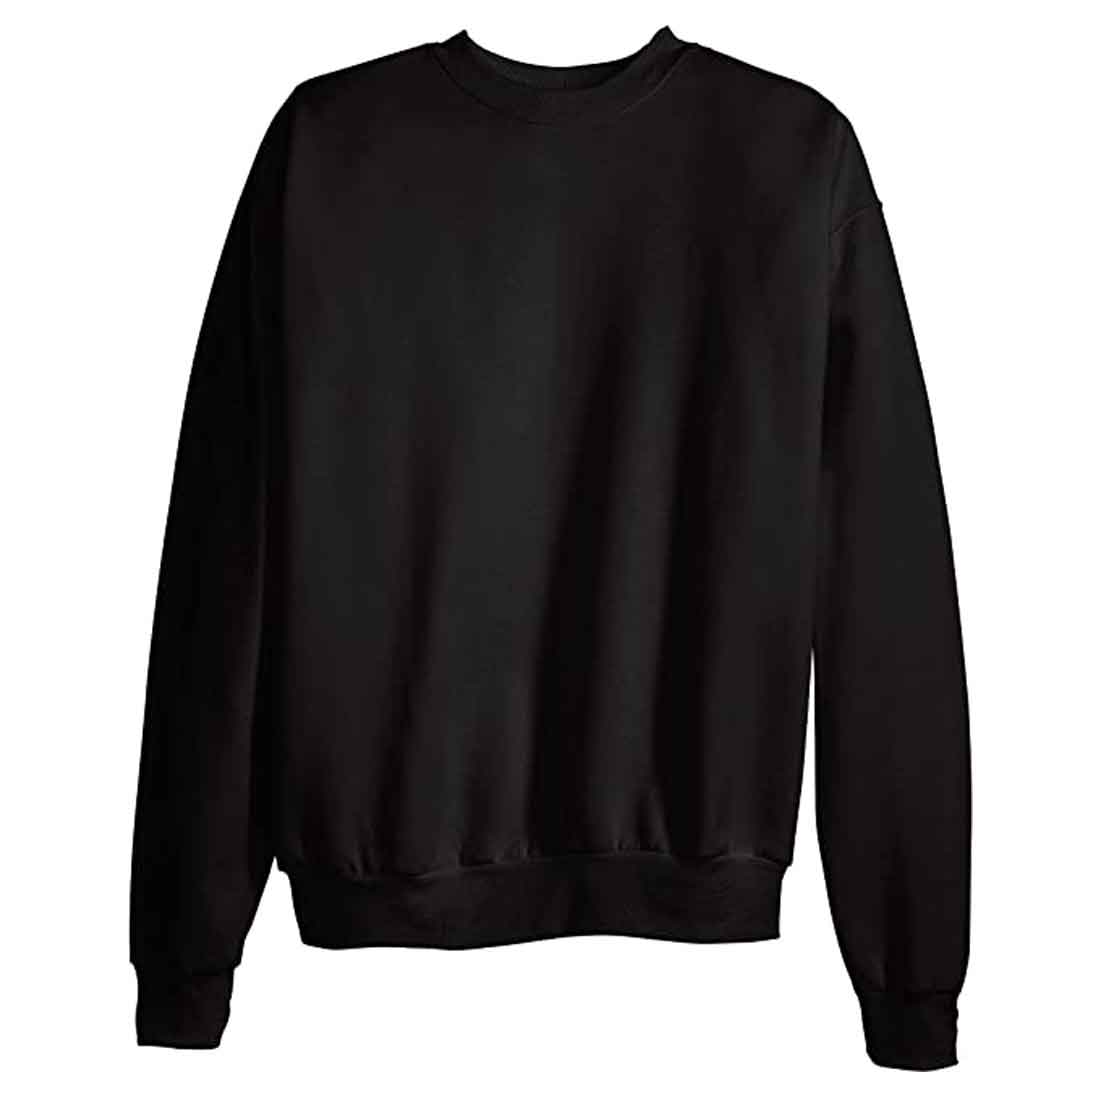 Cotton Full Sleeve Best Sweatshirts for Men  - Friday